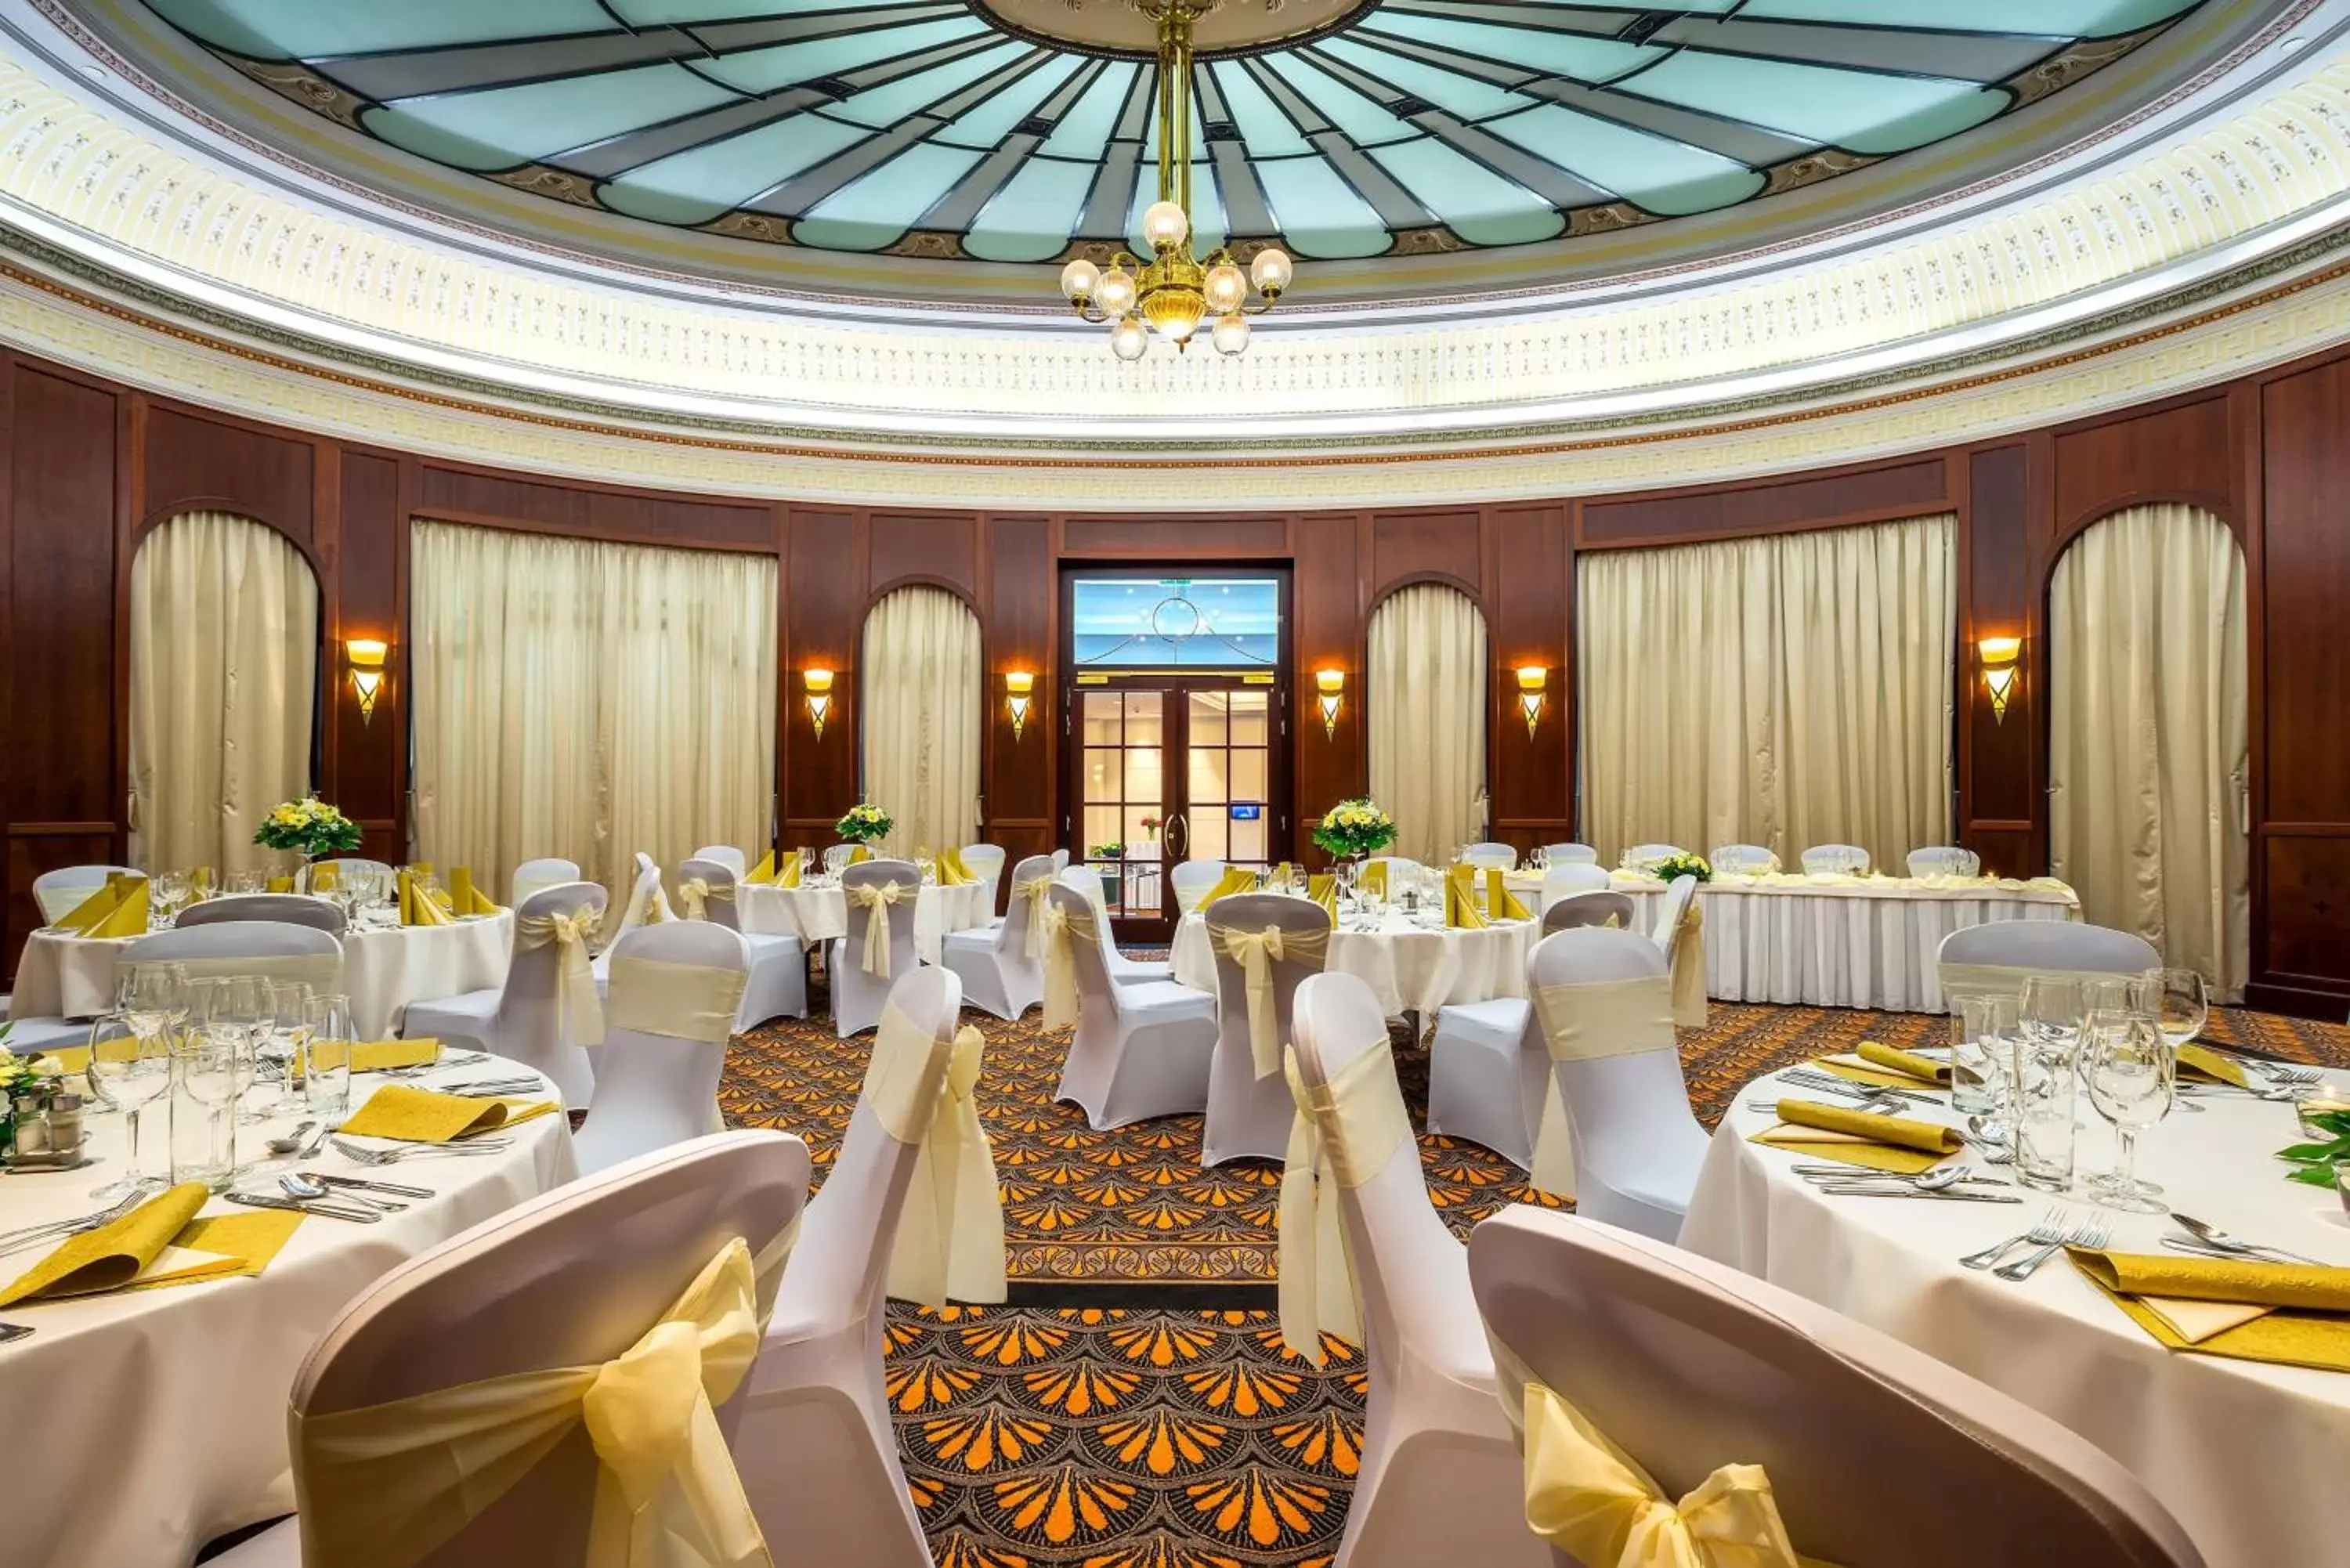 Meeting/conference room, Banquet Facilities in Radisson Blu Carlton Hotel, Bratislava